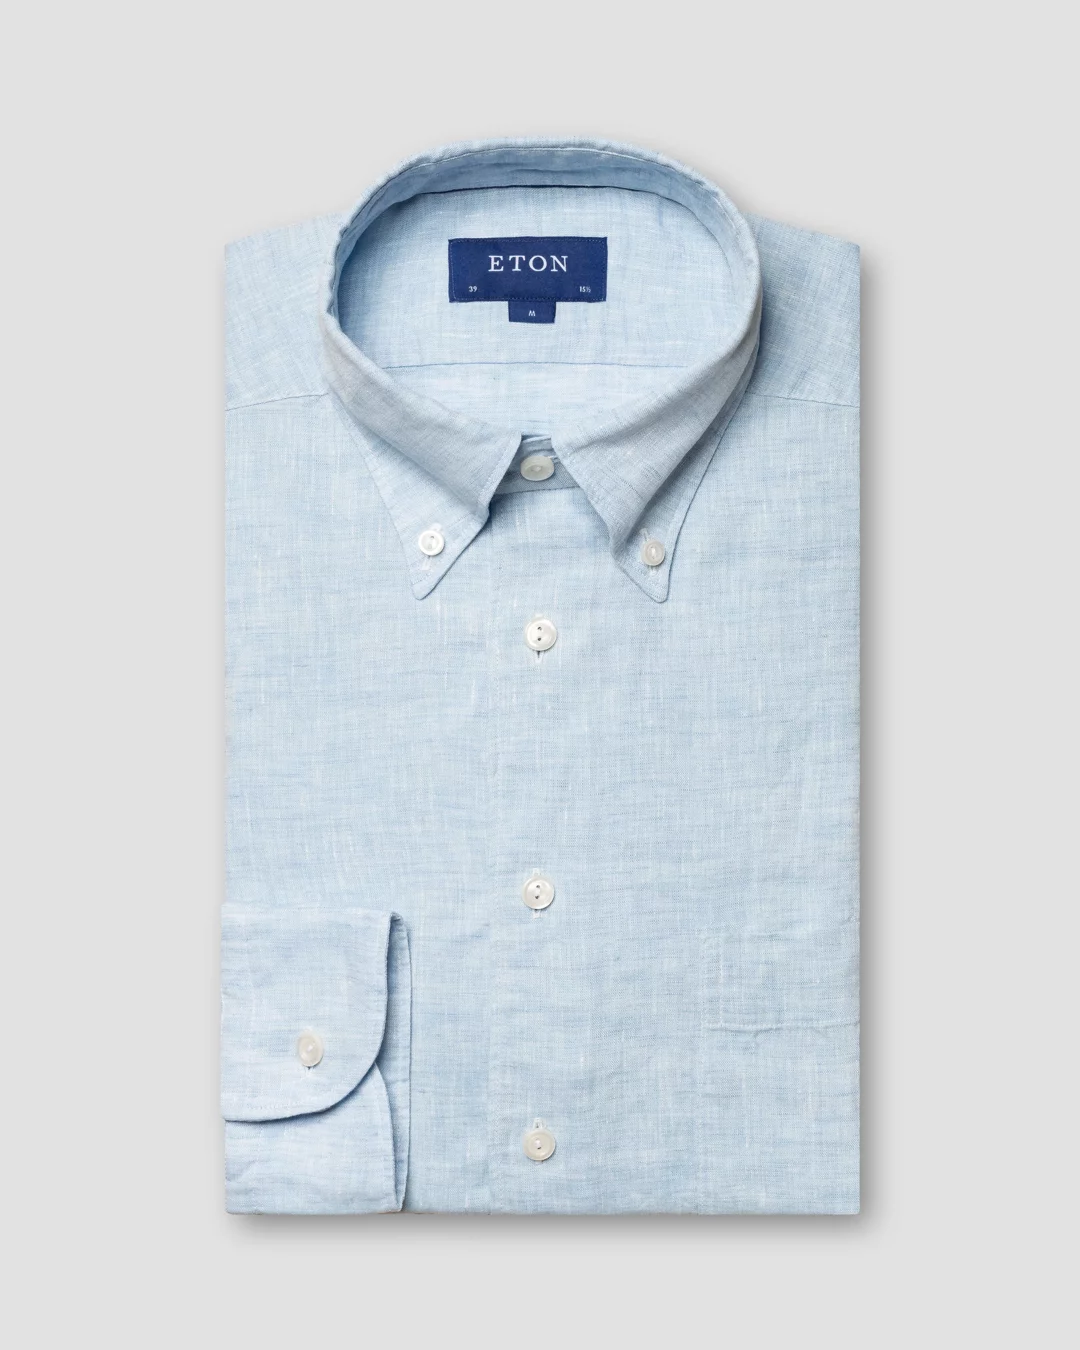 White Linen Shirt - Button Down - Eton